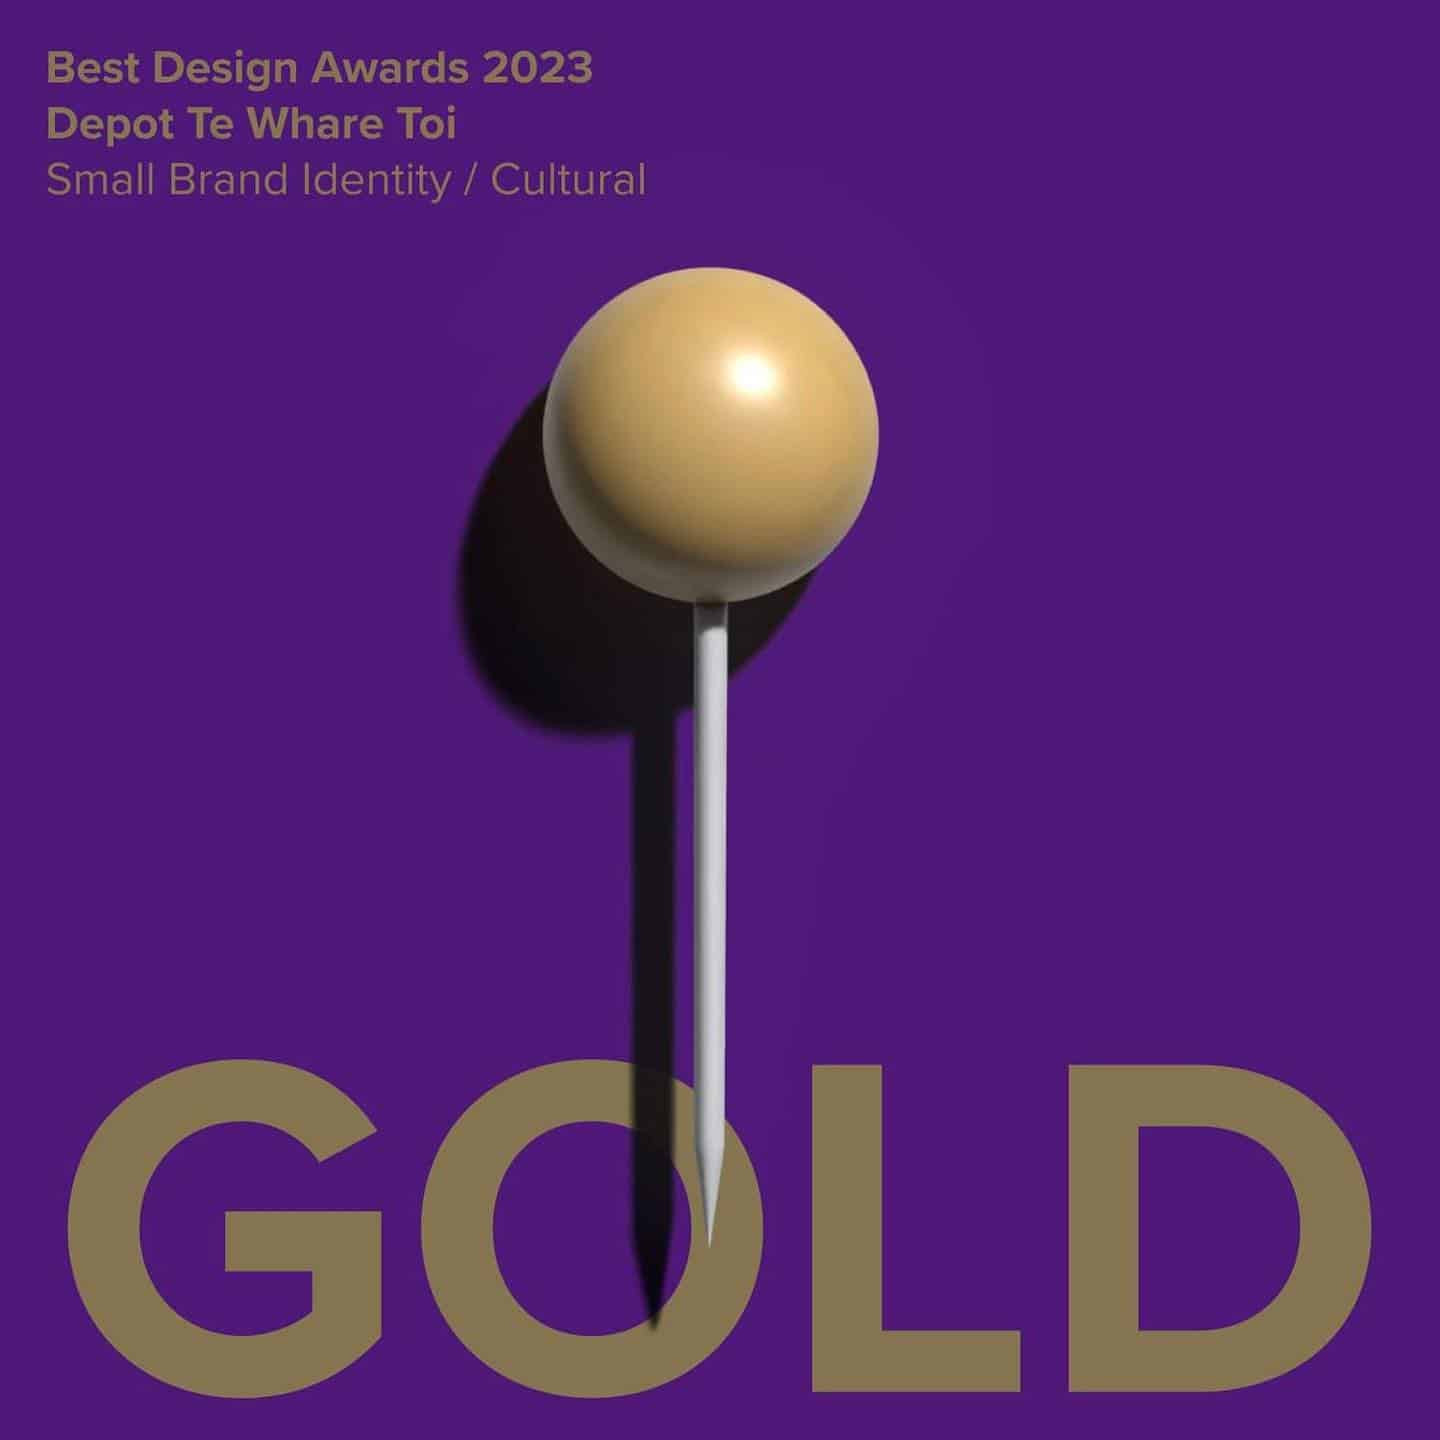 DEPOT wins Gold at the Best Design Awards 2023